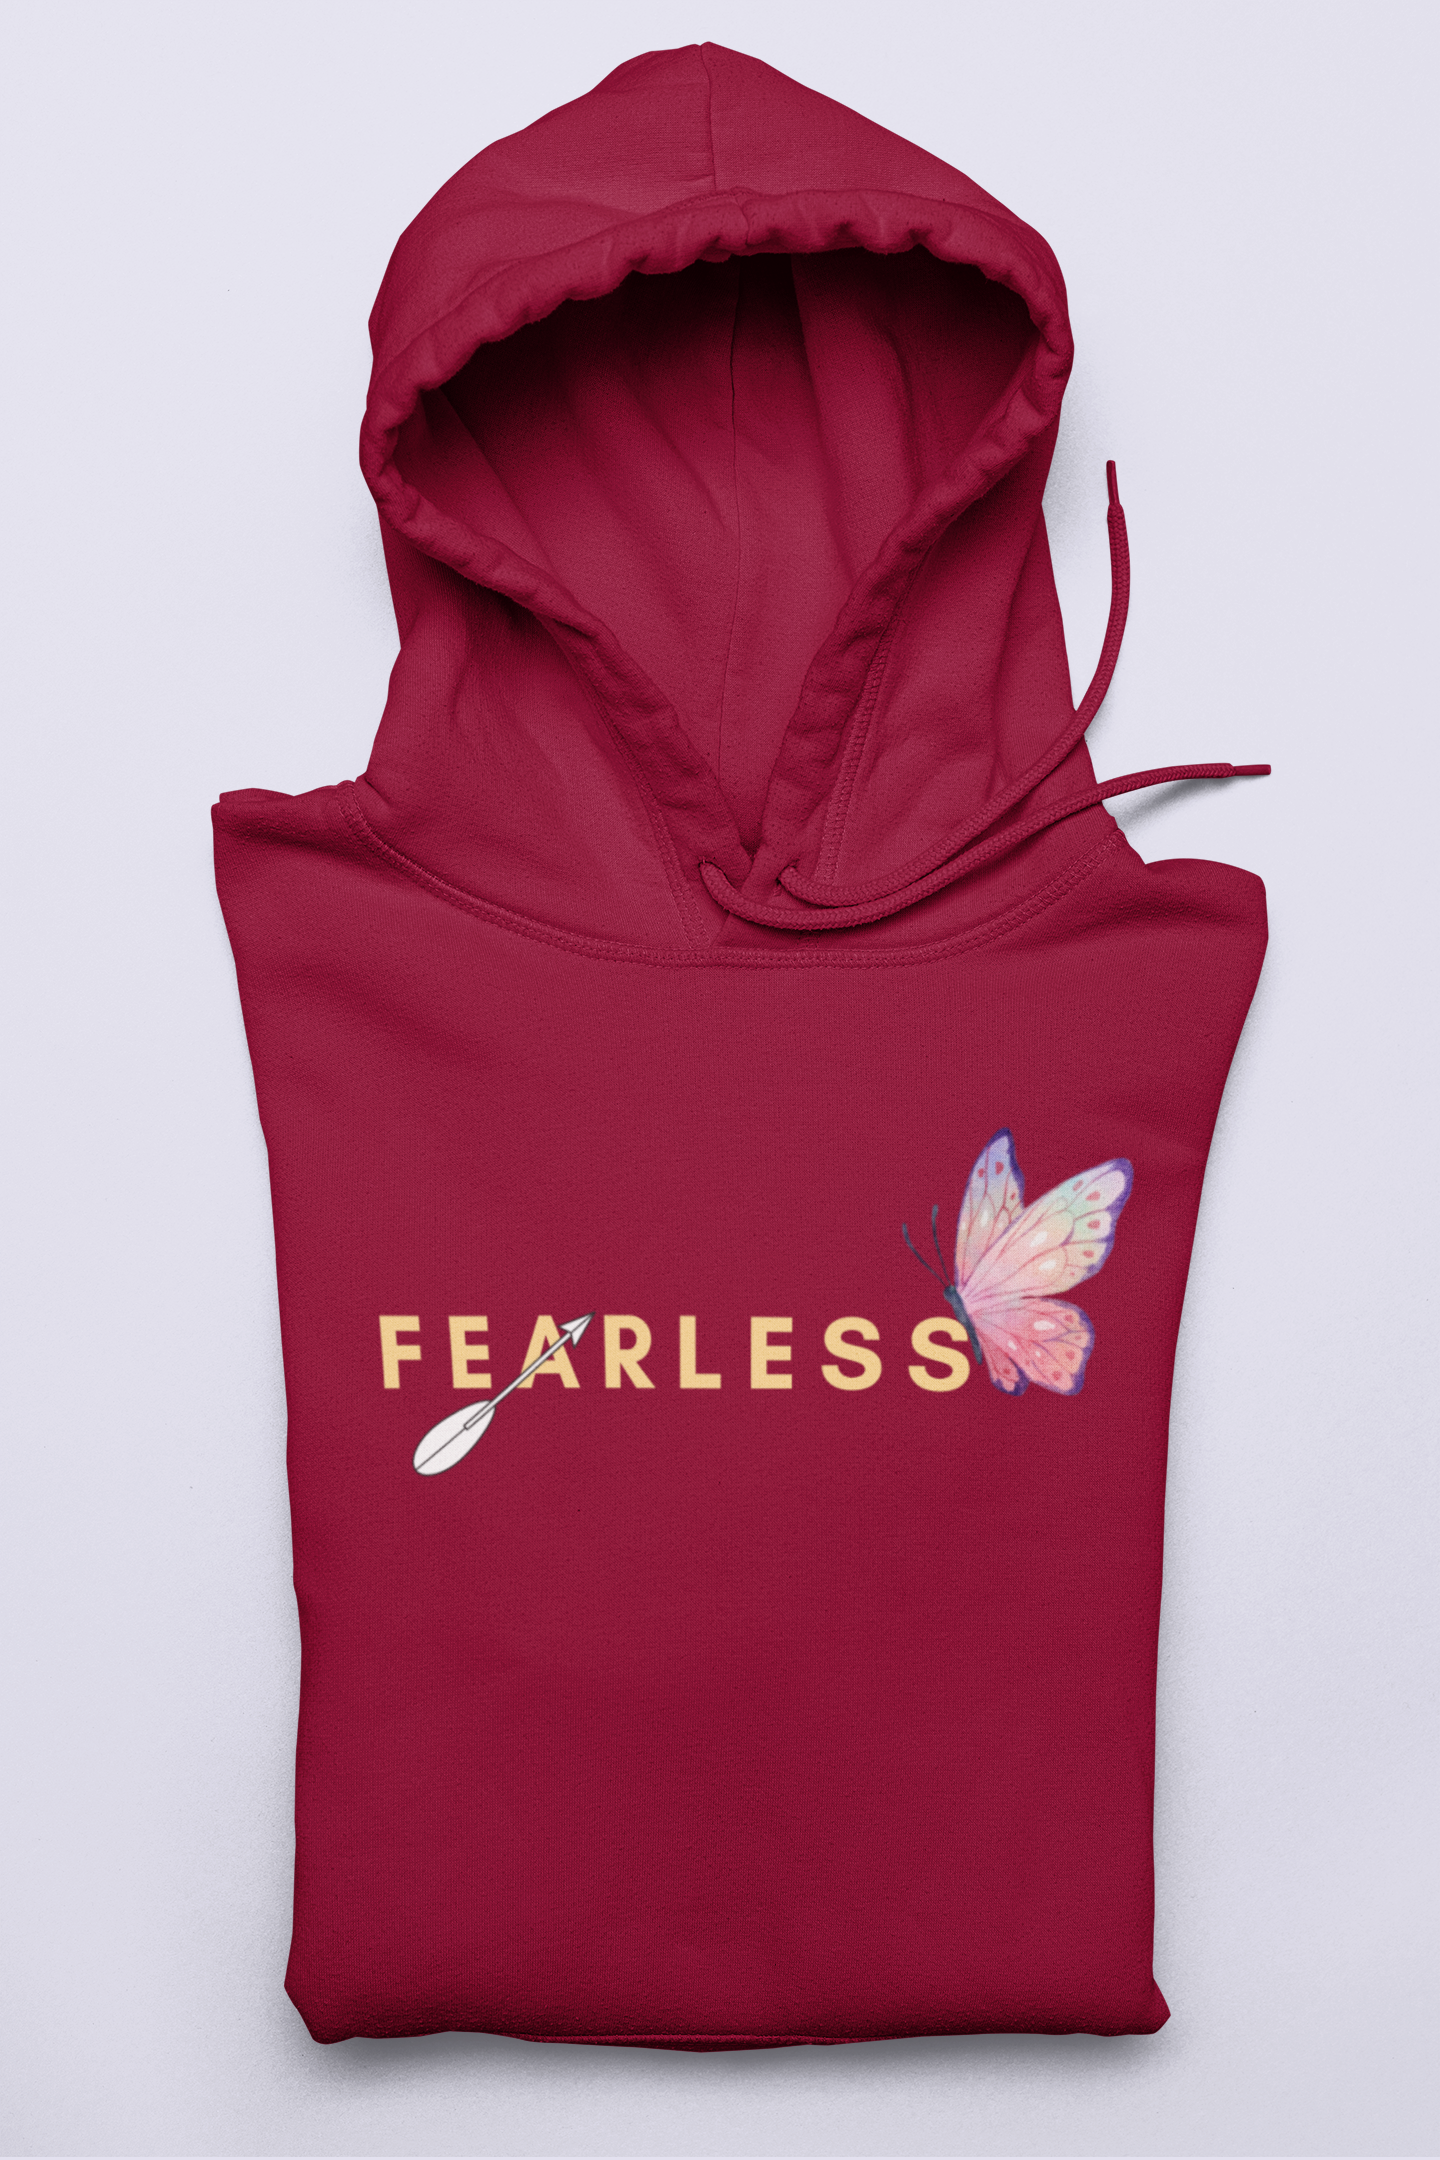 Fearless | Taylor Swift | Premium Unisex Winter Hoodie